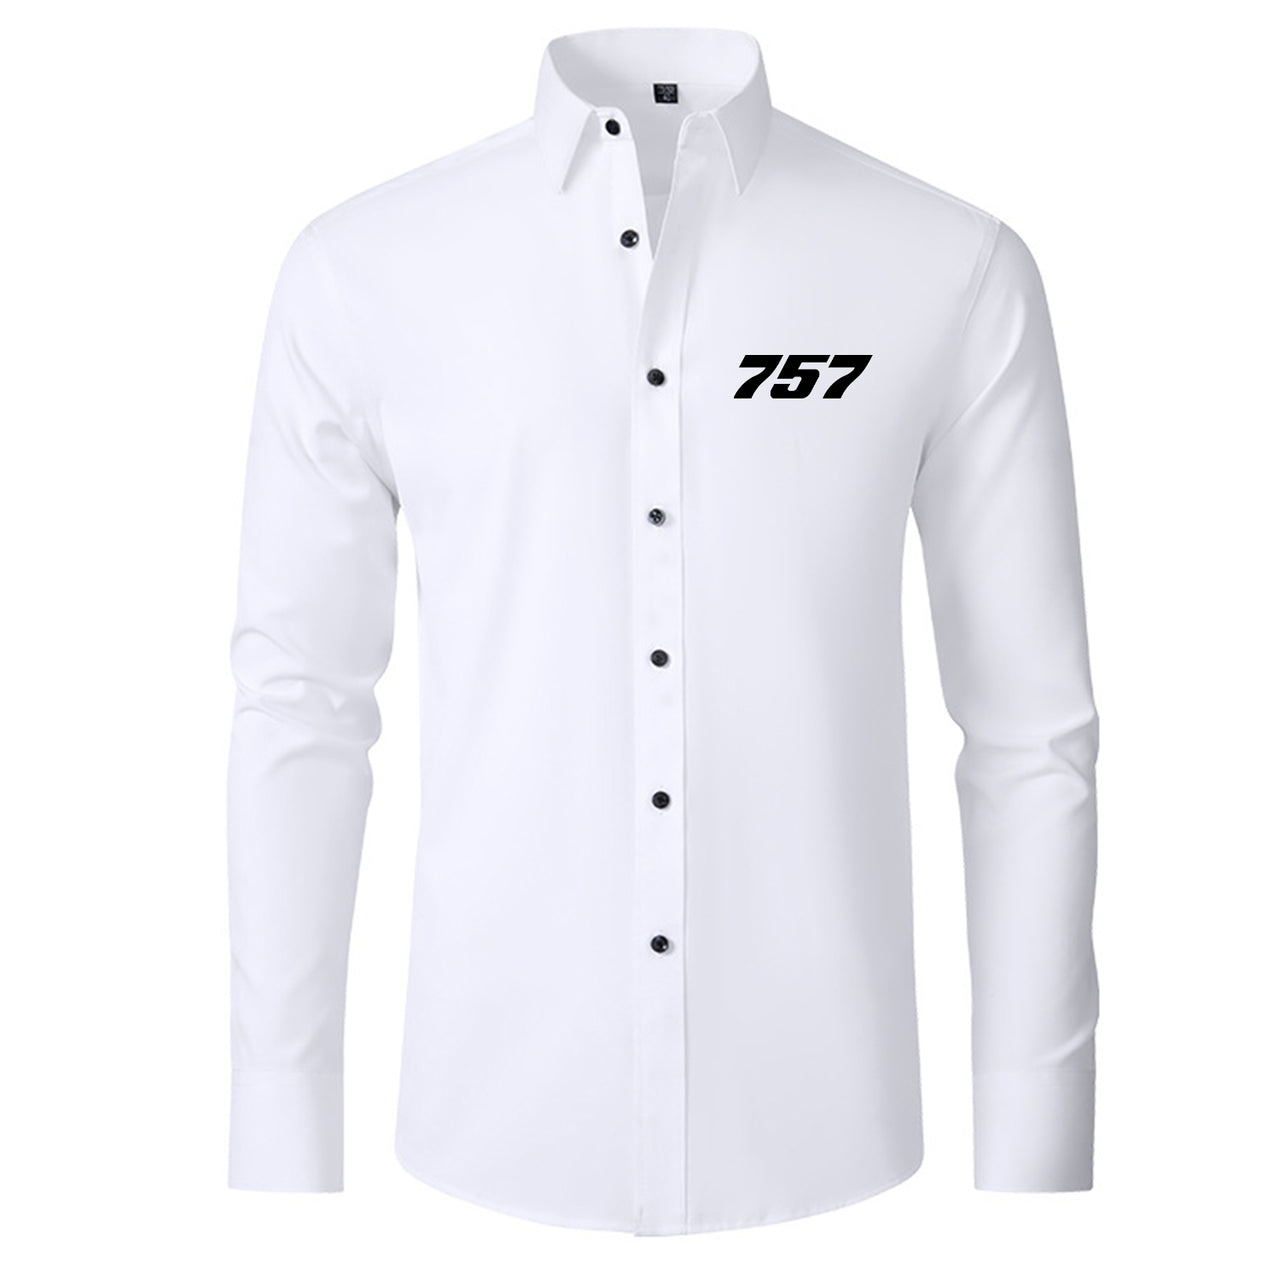 757 Flat Text Designed Long Sleeve Shirts